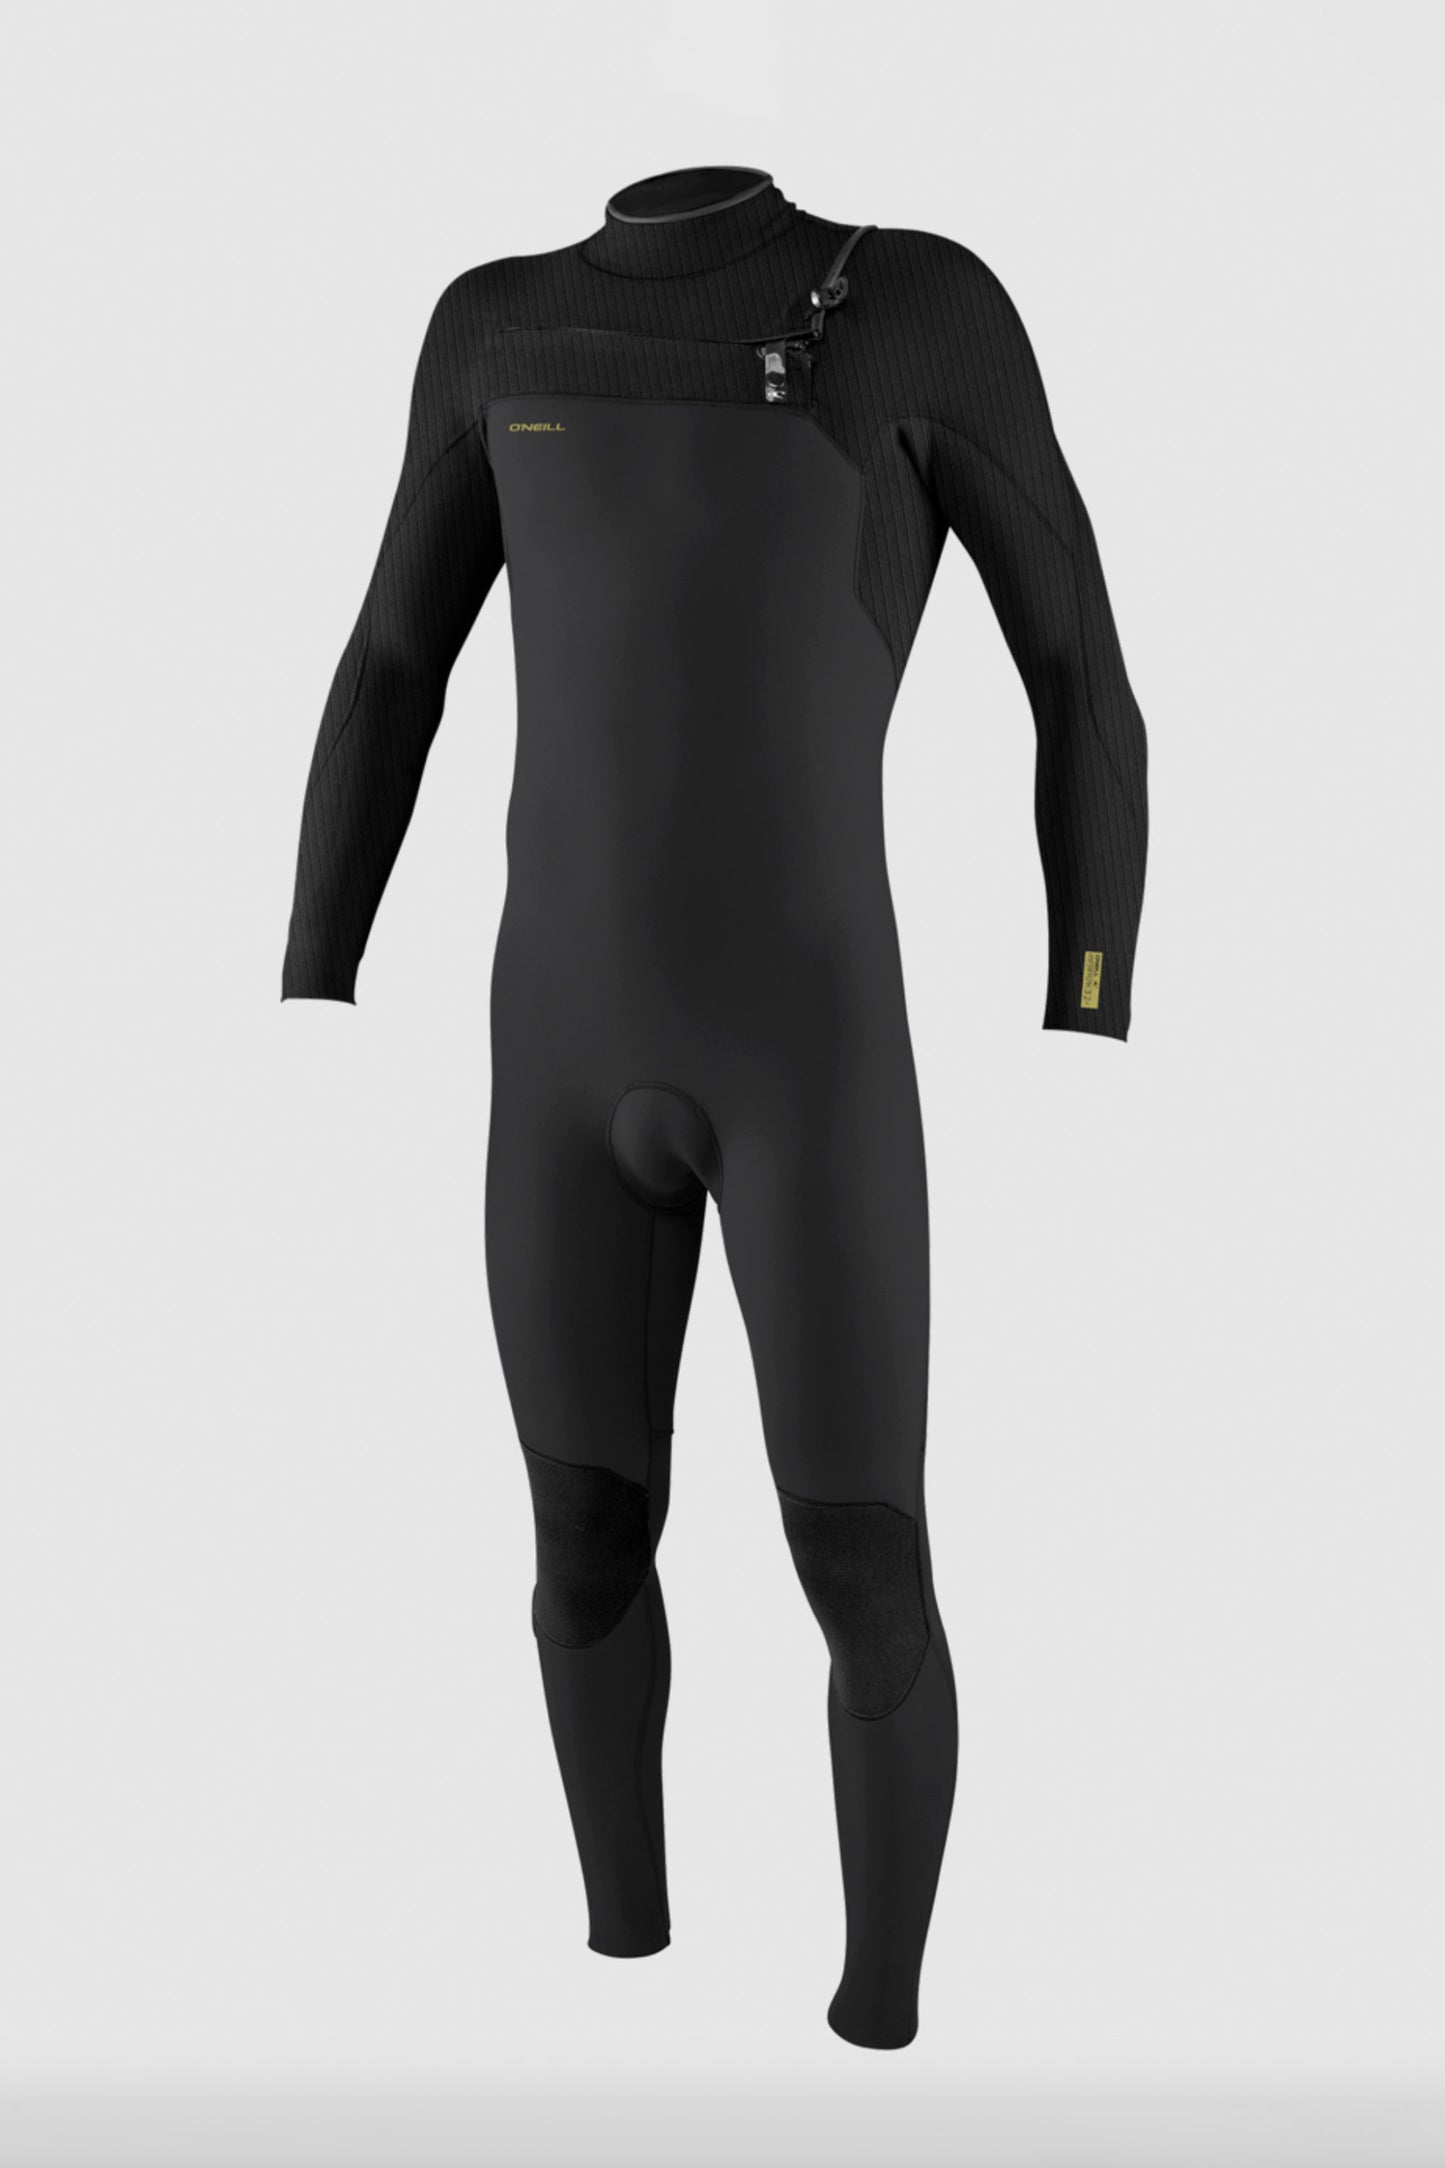    Pukas-Surf-Shop-oneill-wetsuit-Hyperfreak-4-3_Chest-Zip